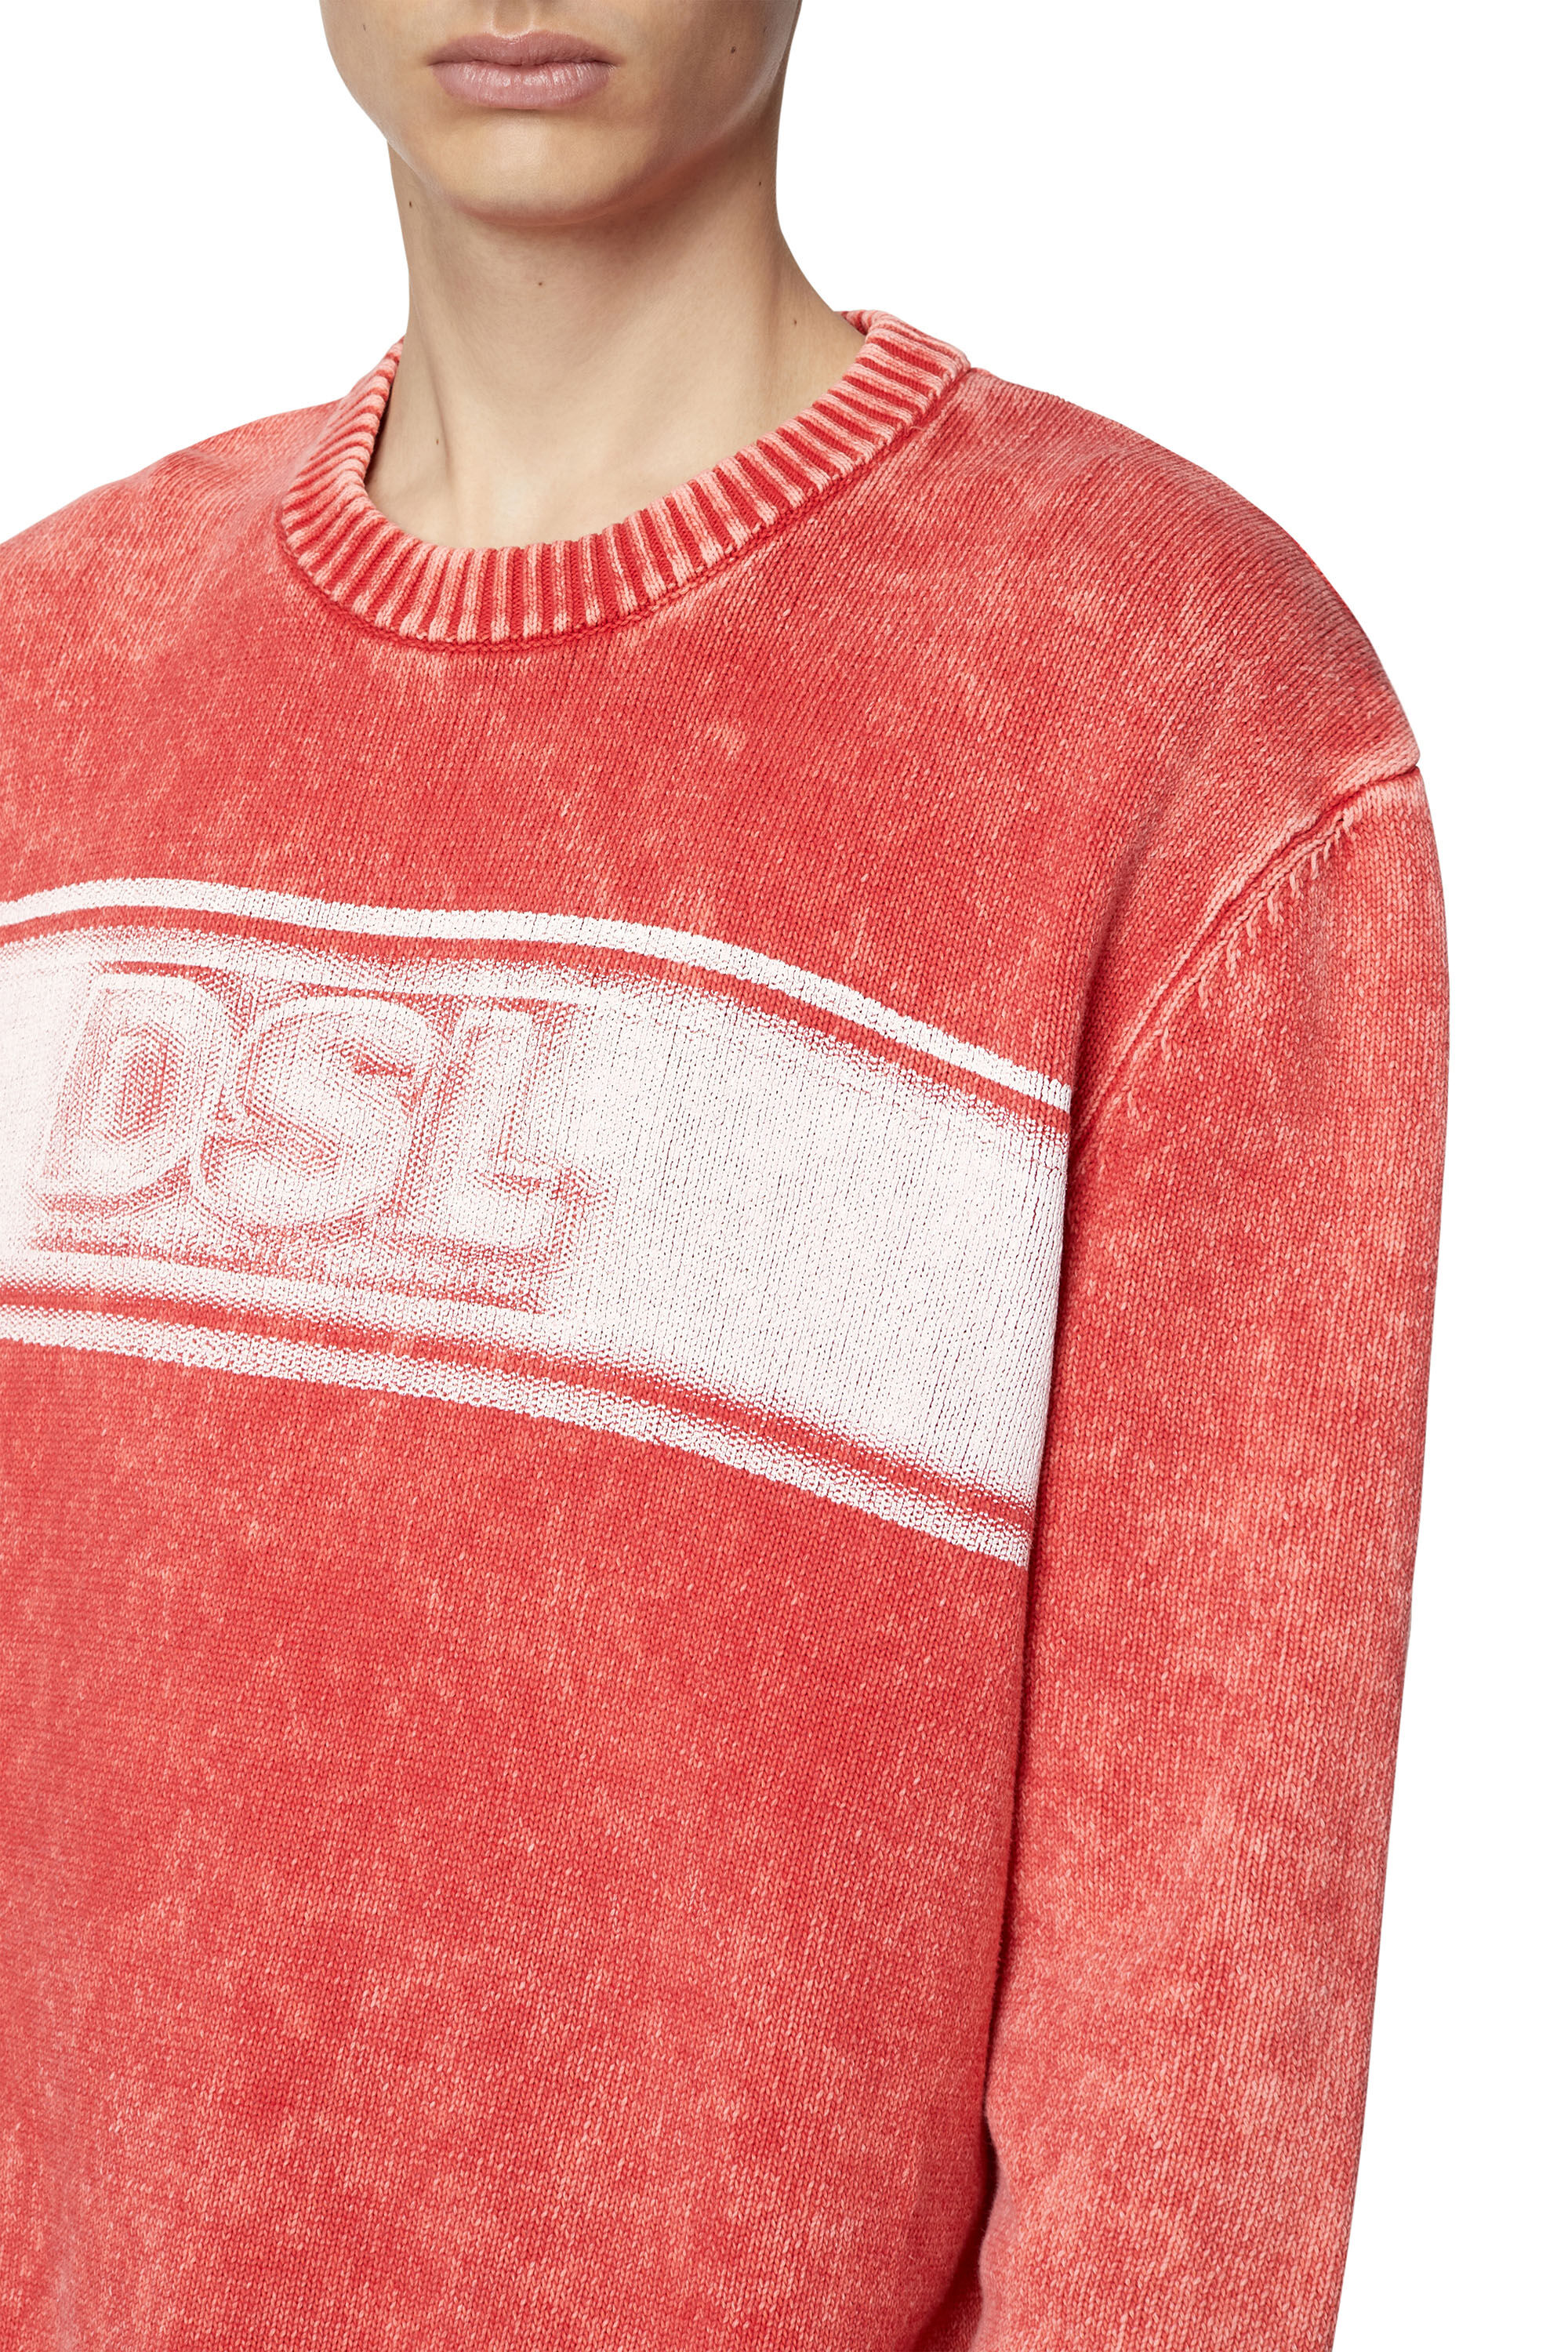 K-ORTEZ Man: Treated jumper with DSL logo band | Diesel